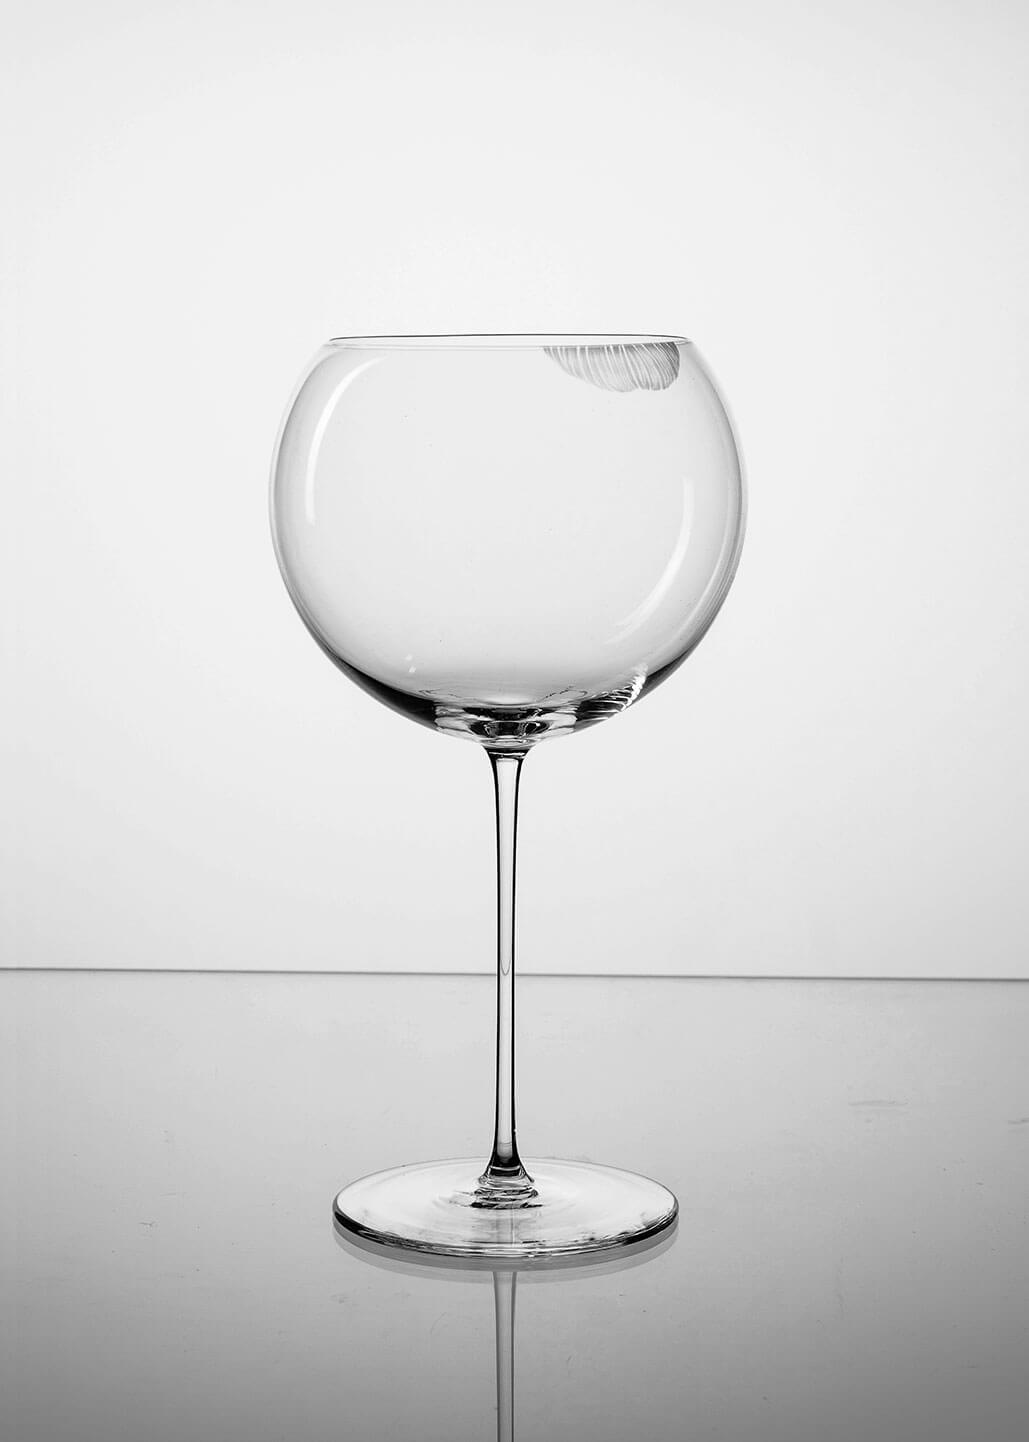 kissBubbles wine glasses